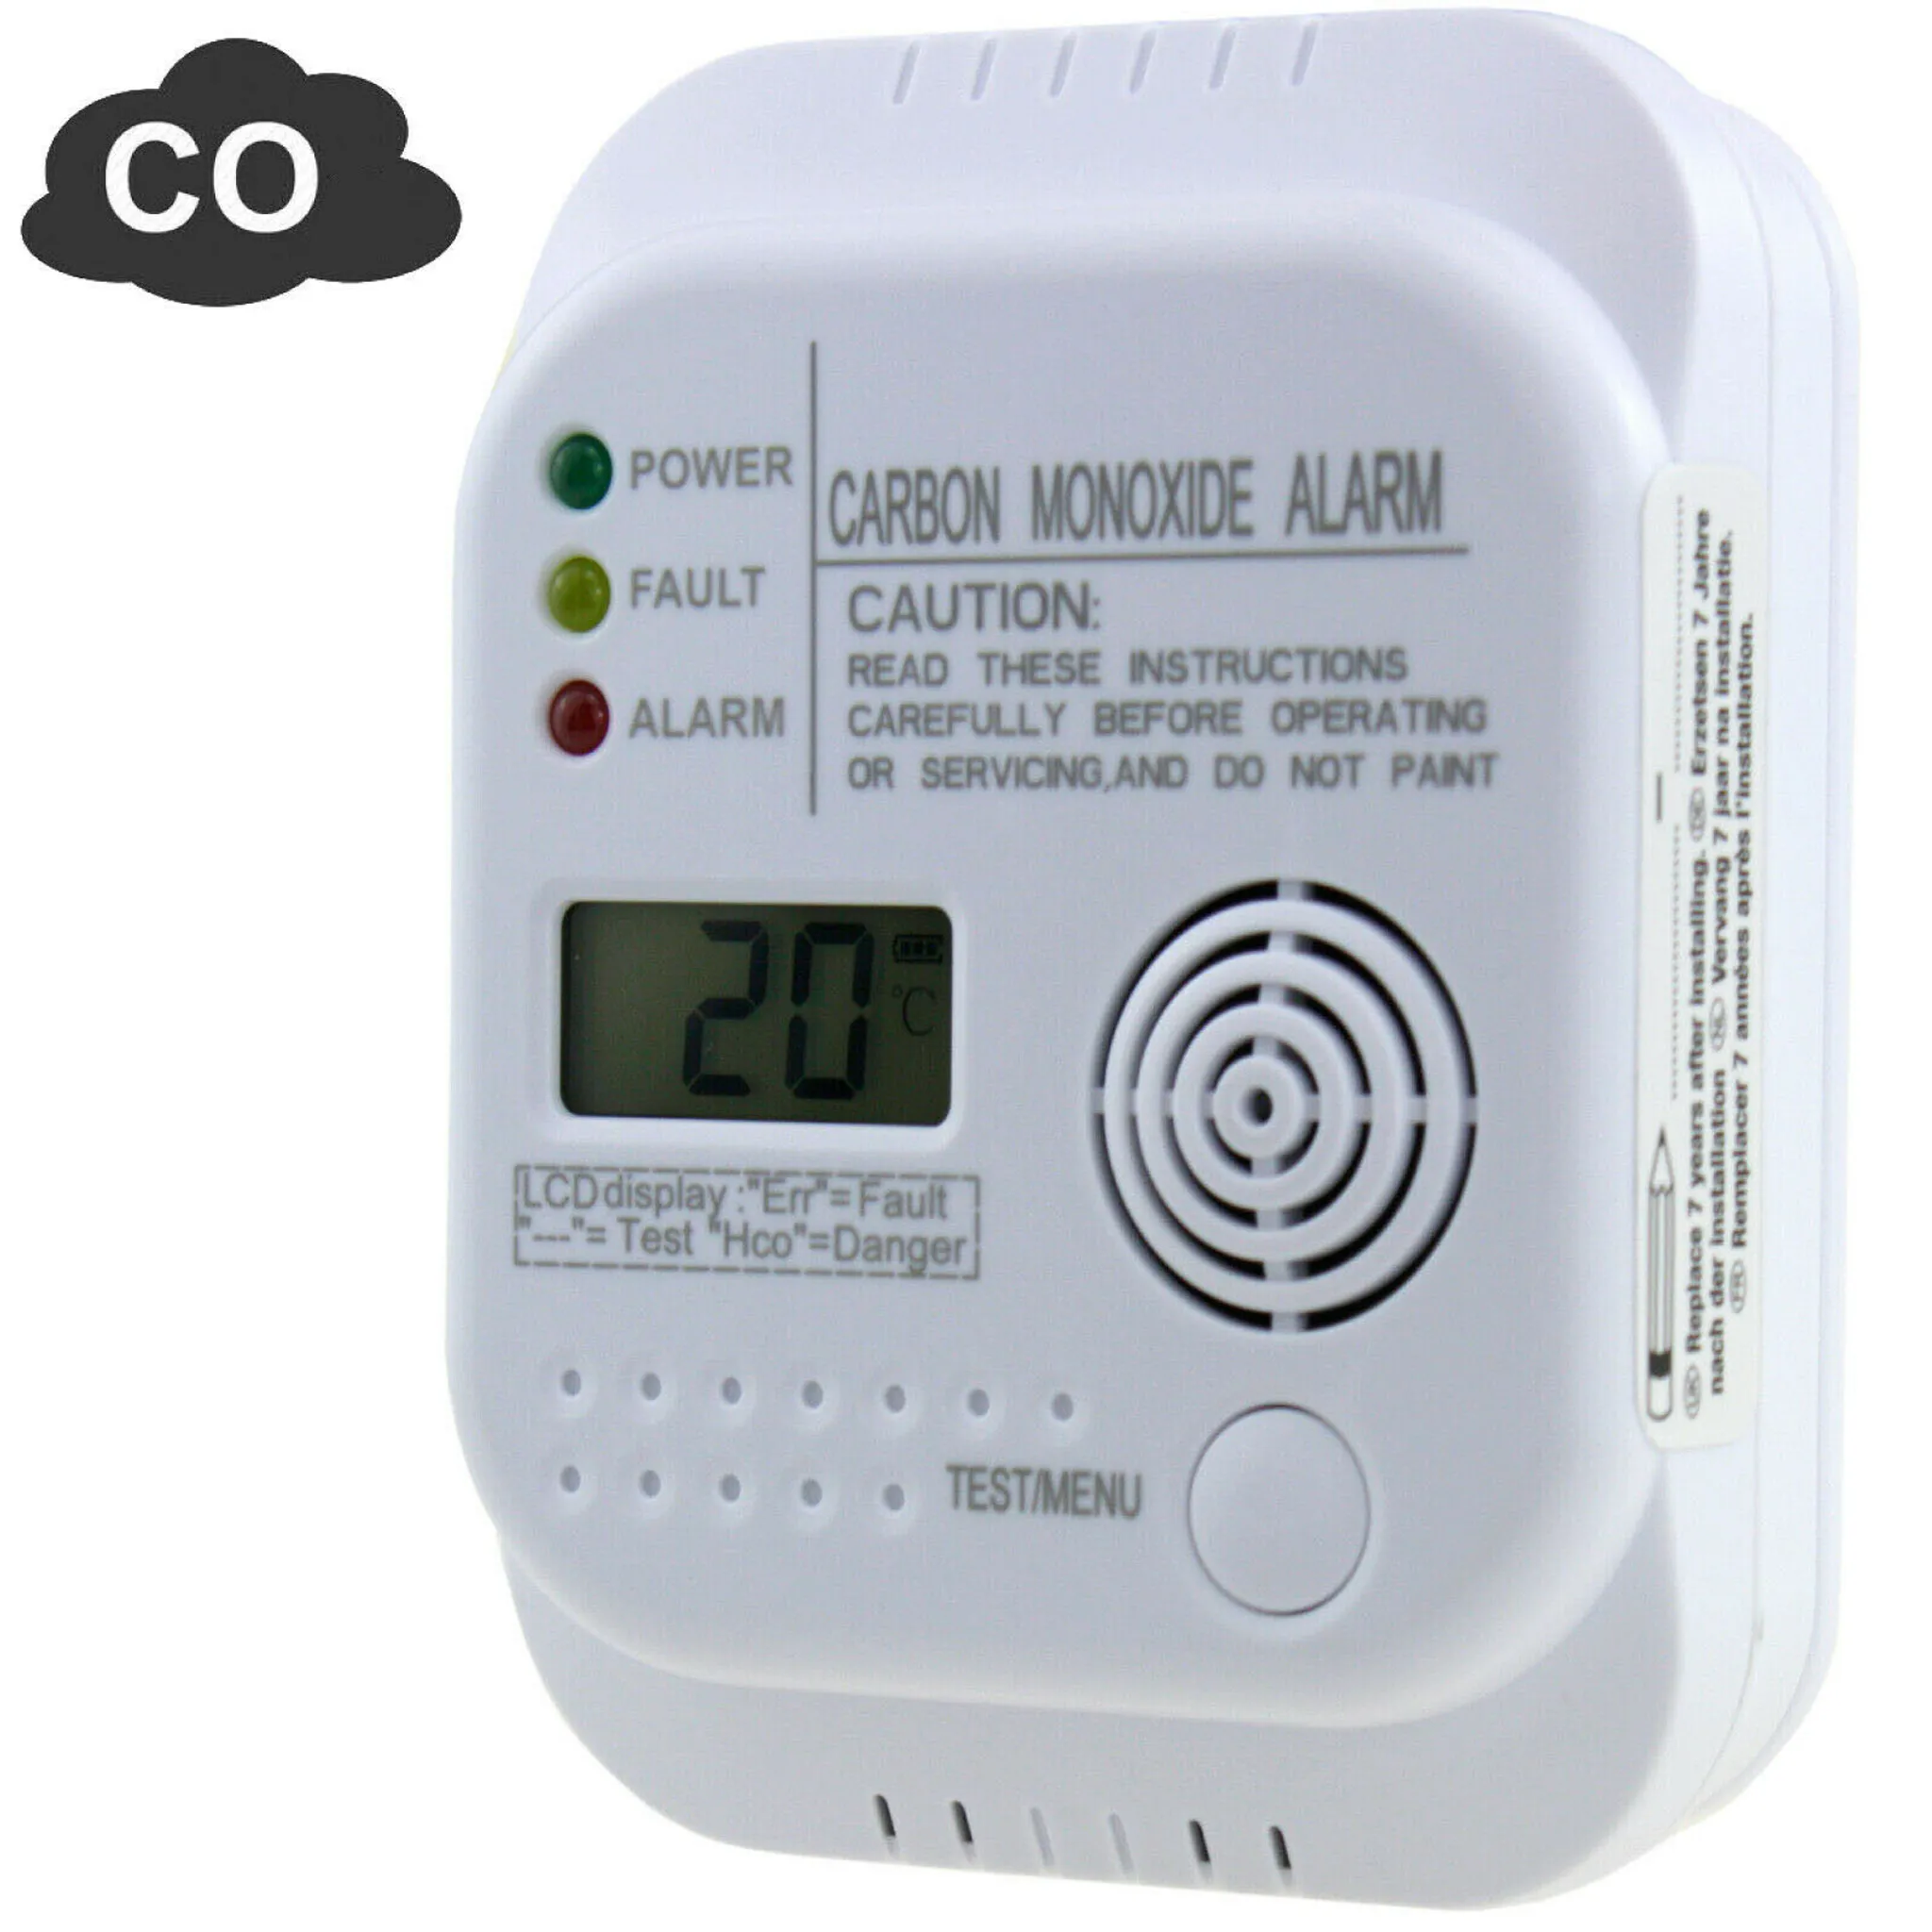 CO Melder Kohlenmonoxidmelder Kohlenmonoxid Warnmelder mit LCD Display 85DB Alarm Mit 3 Ebenen Alarmkonzentration 